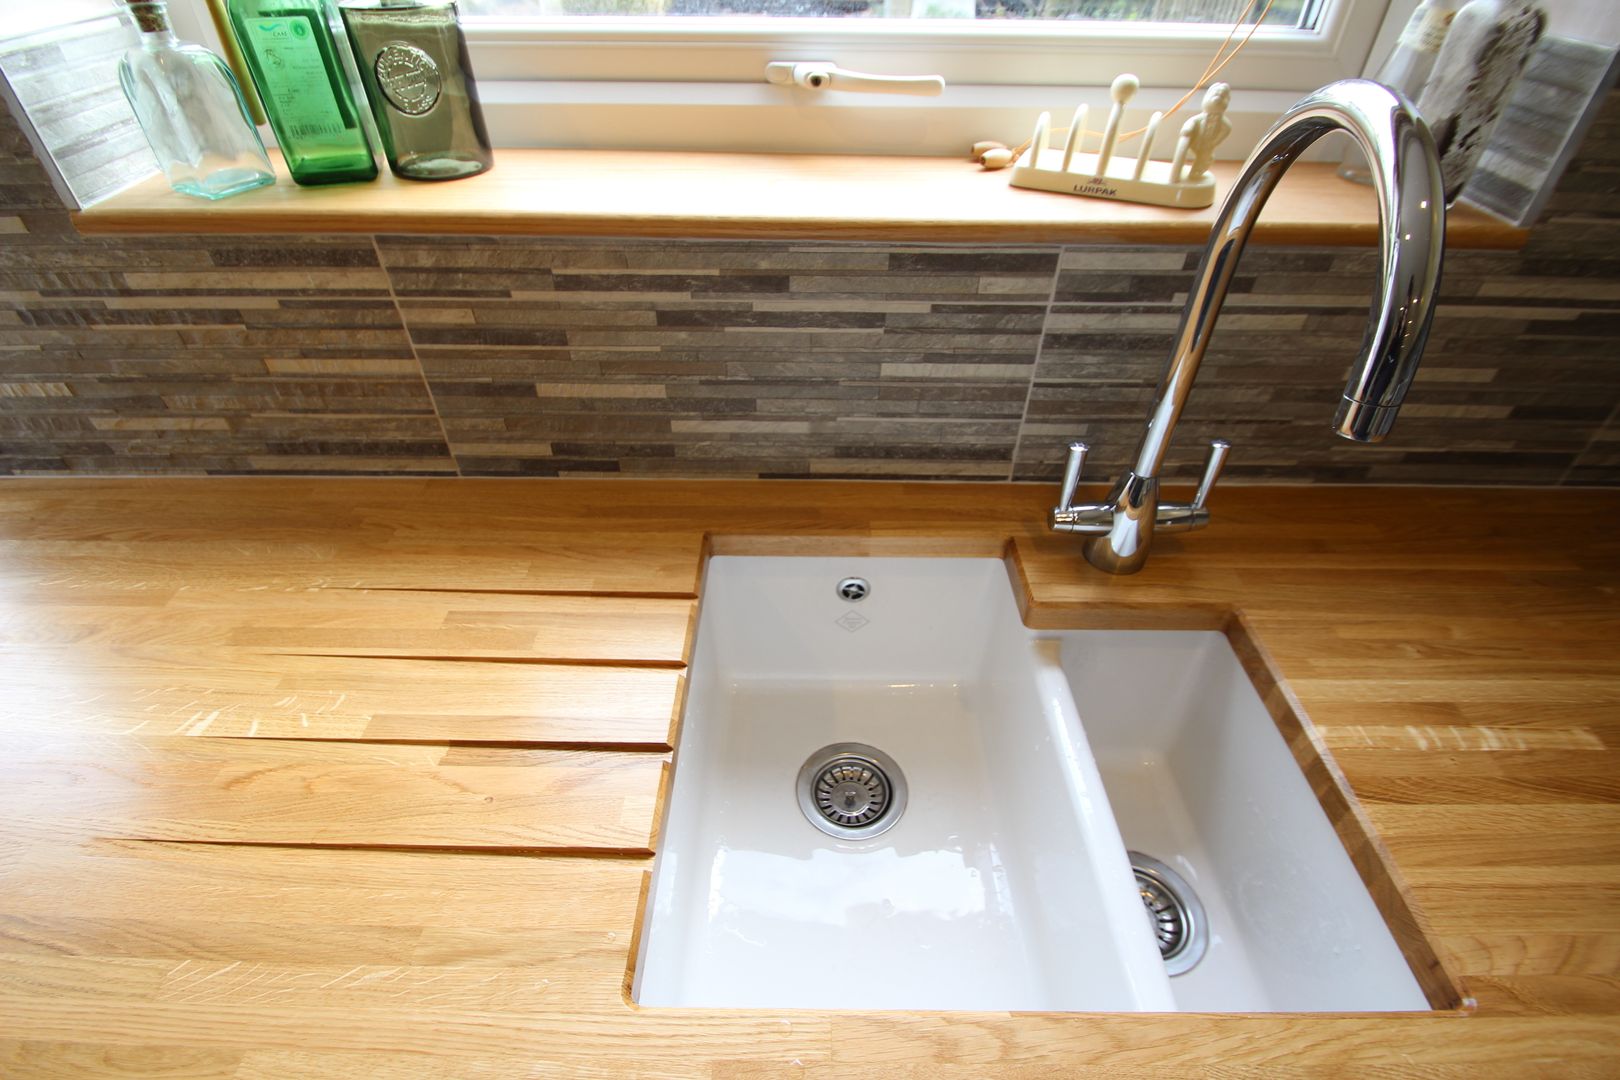 Sink with drain grooves on the worktop AD3 Design Limited مطبخ مغاسل وصنابيرالماء